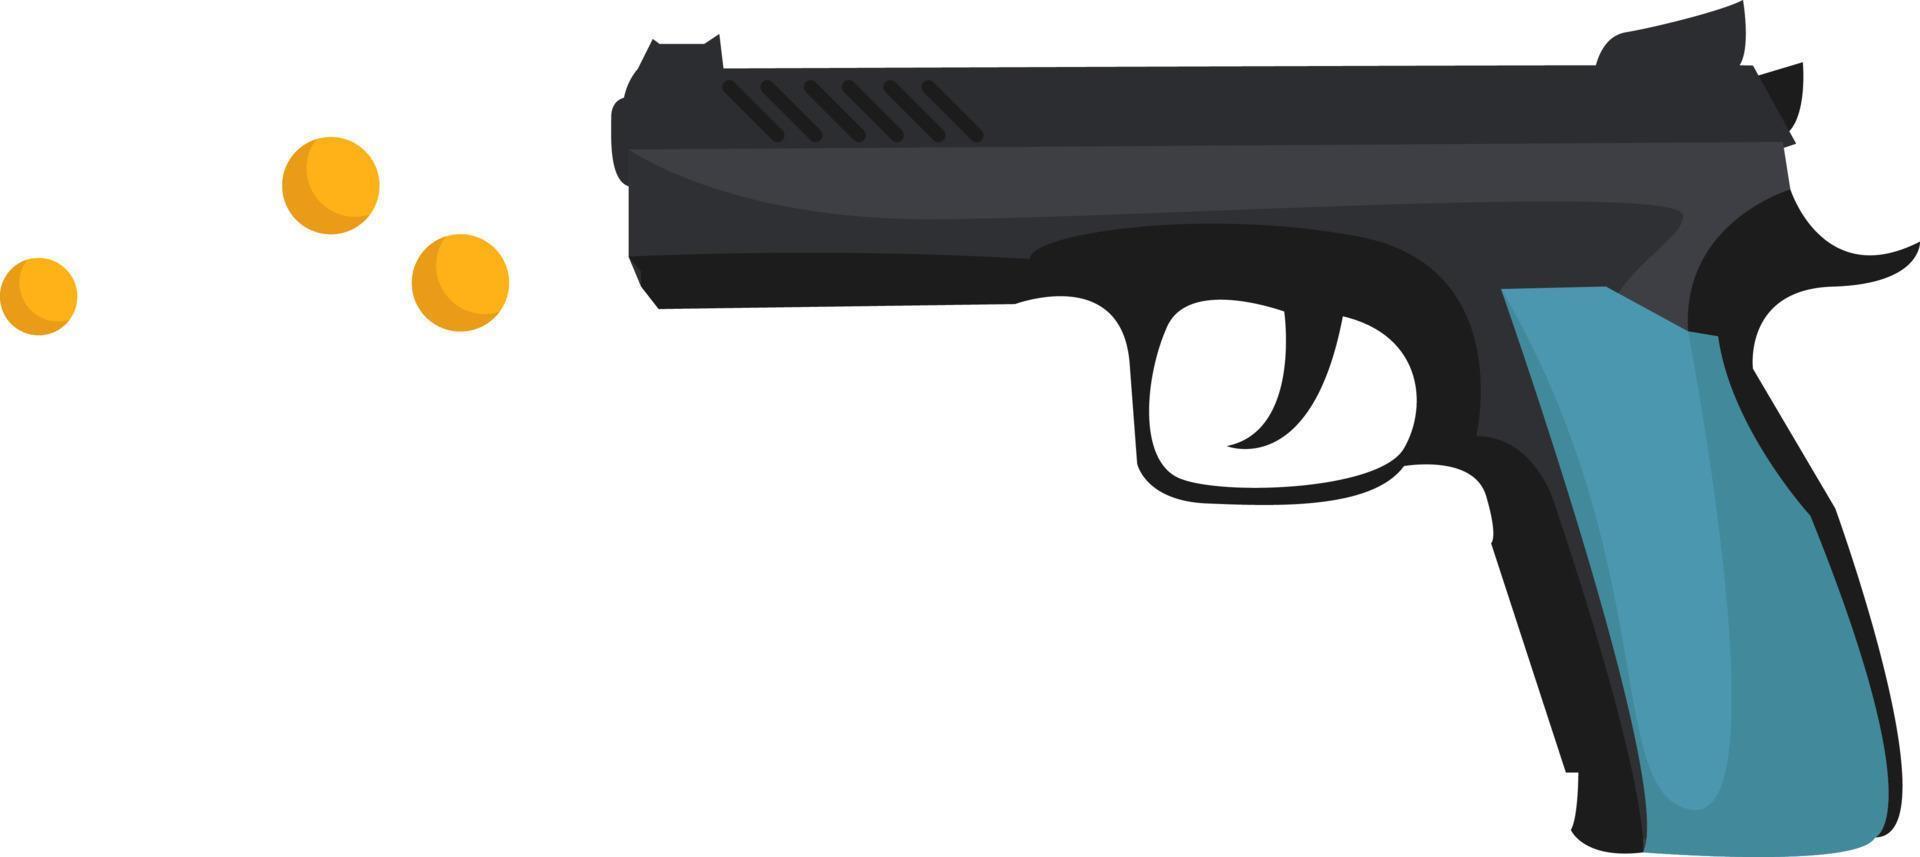 Toy pistol, illustration, vector on white background